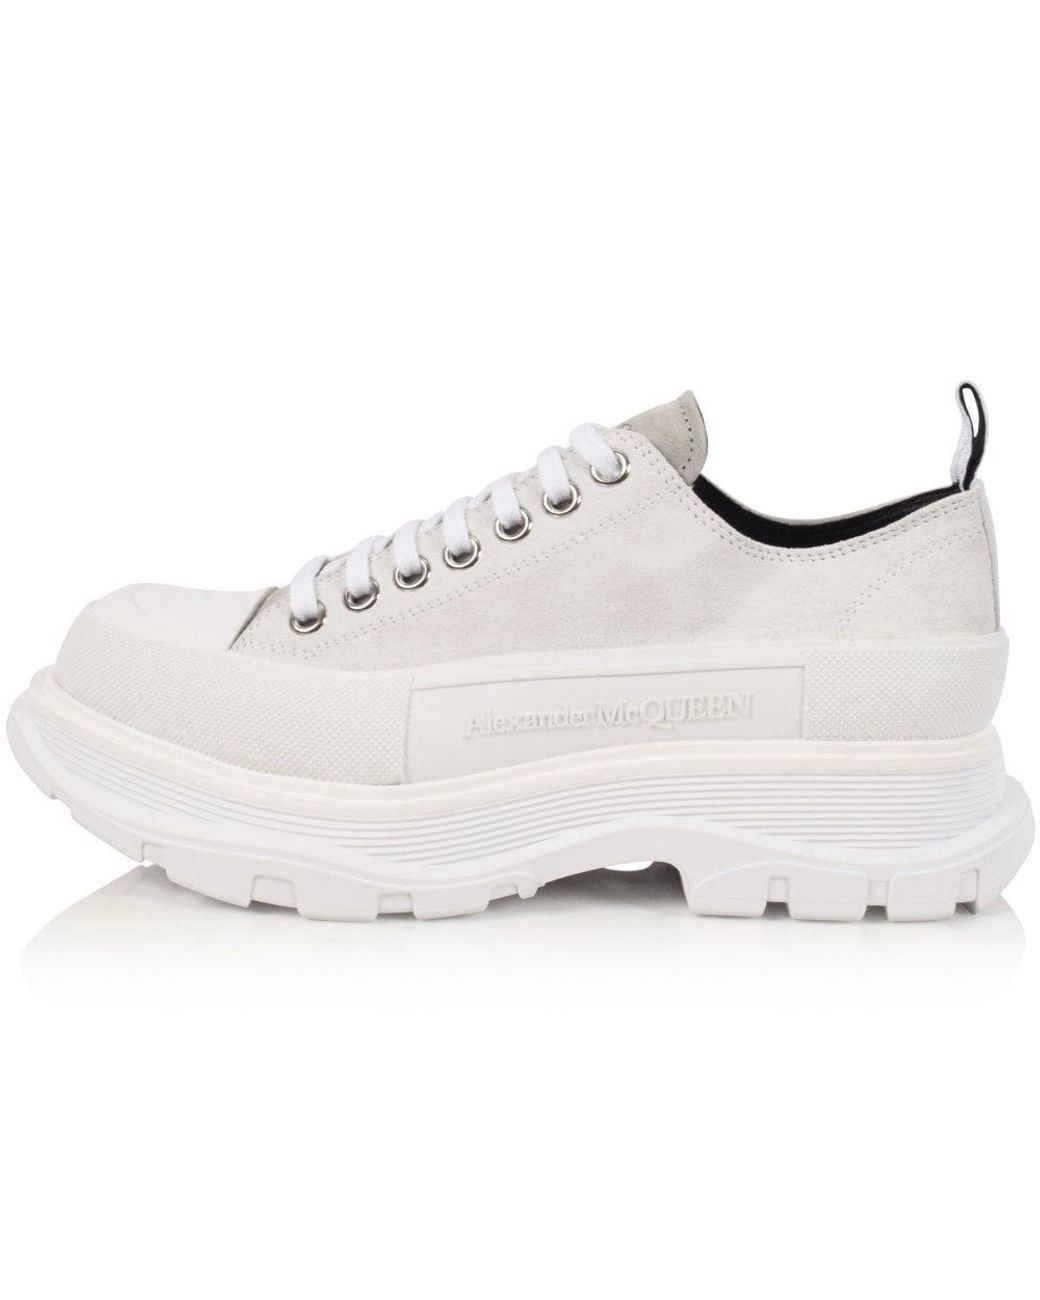 Alexander McQueen Canvas Tread Slick Sneakers in White for Men - Save ...